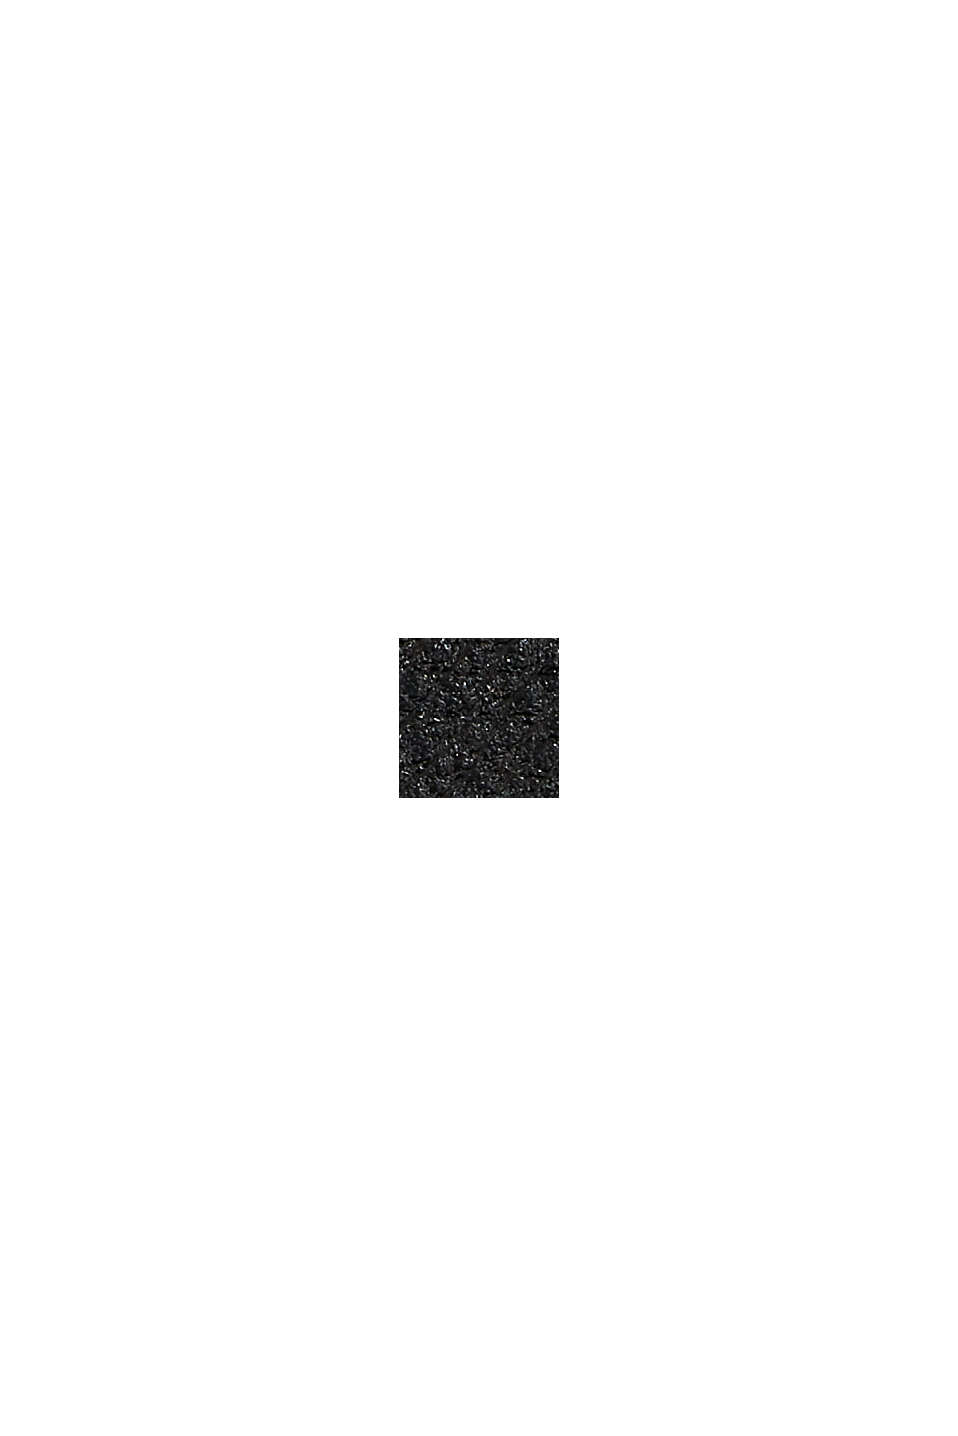 In materiale vegano: piccolo portafoglio in similpelle, BLACK, swatch